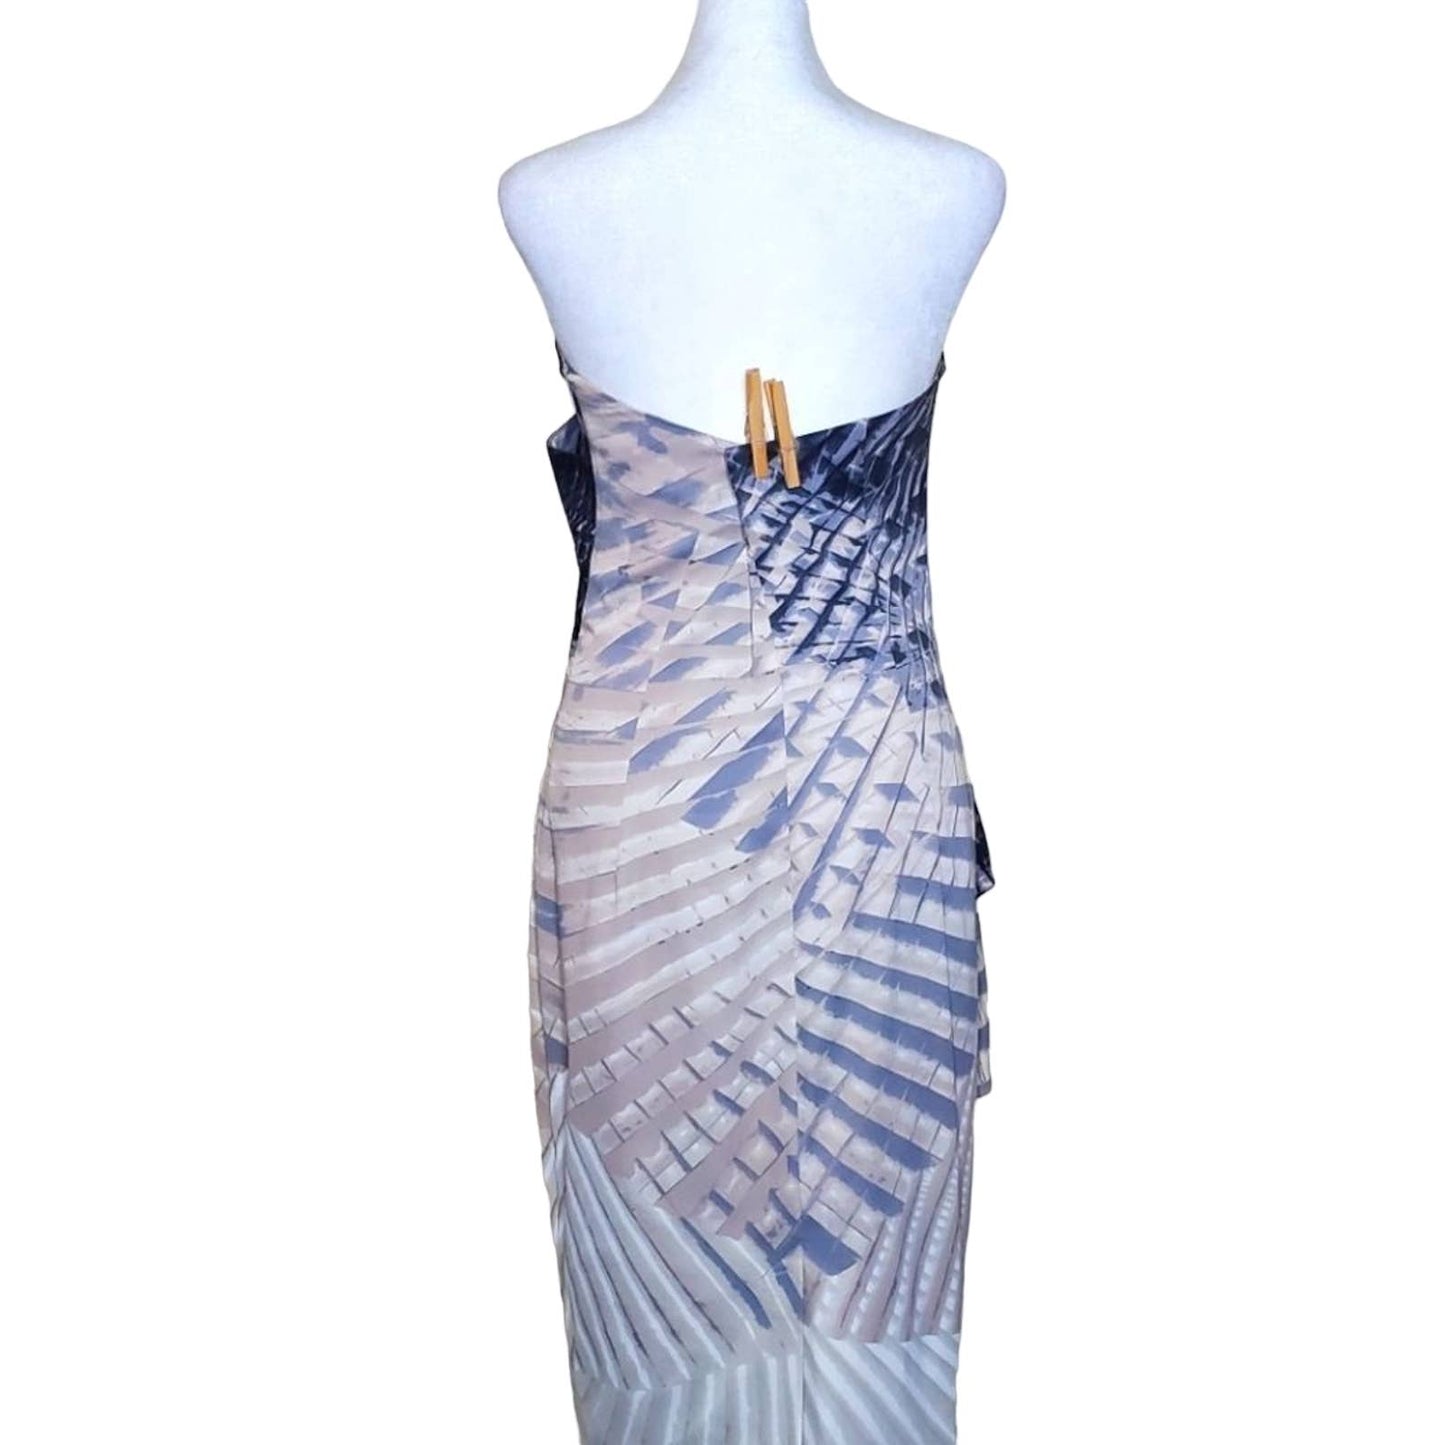 Karen Millen Strapless Dress with Gray, Tan, Cream Design, Size  12